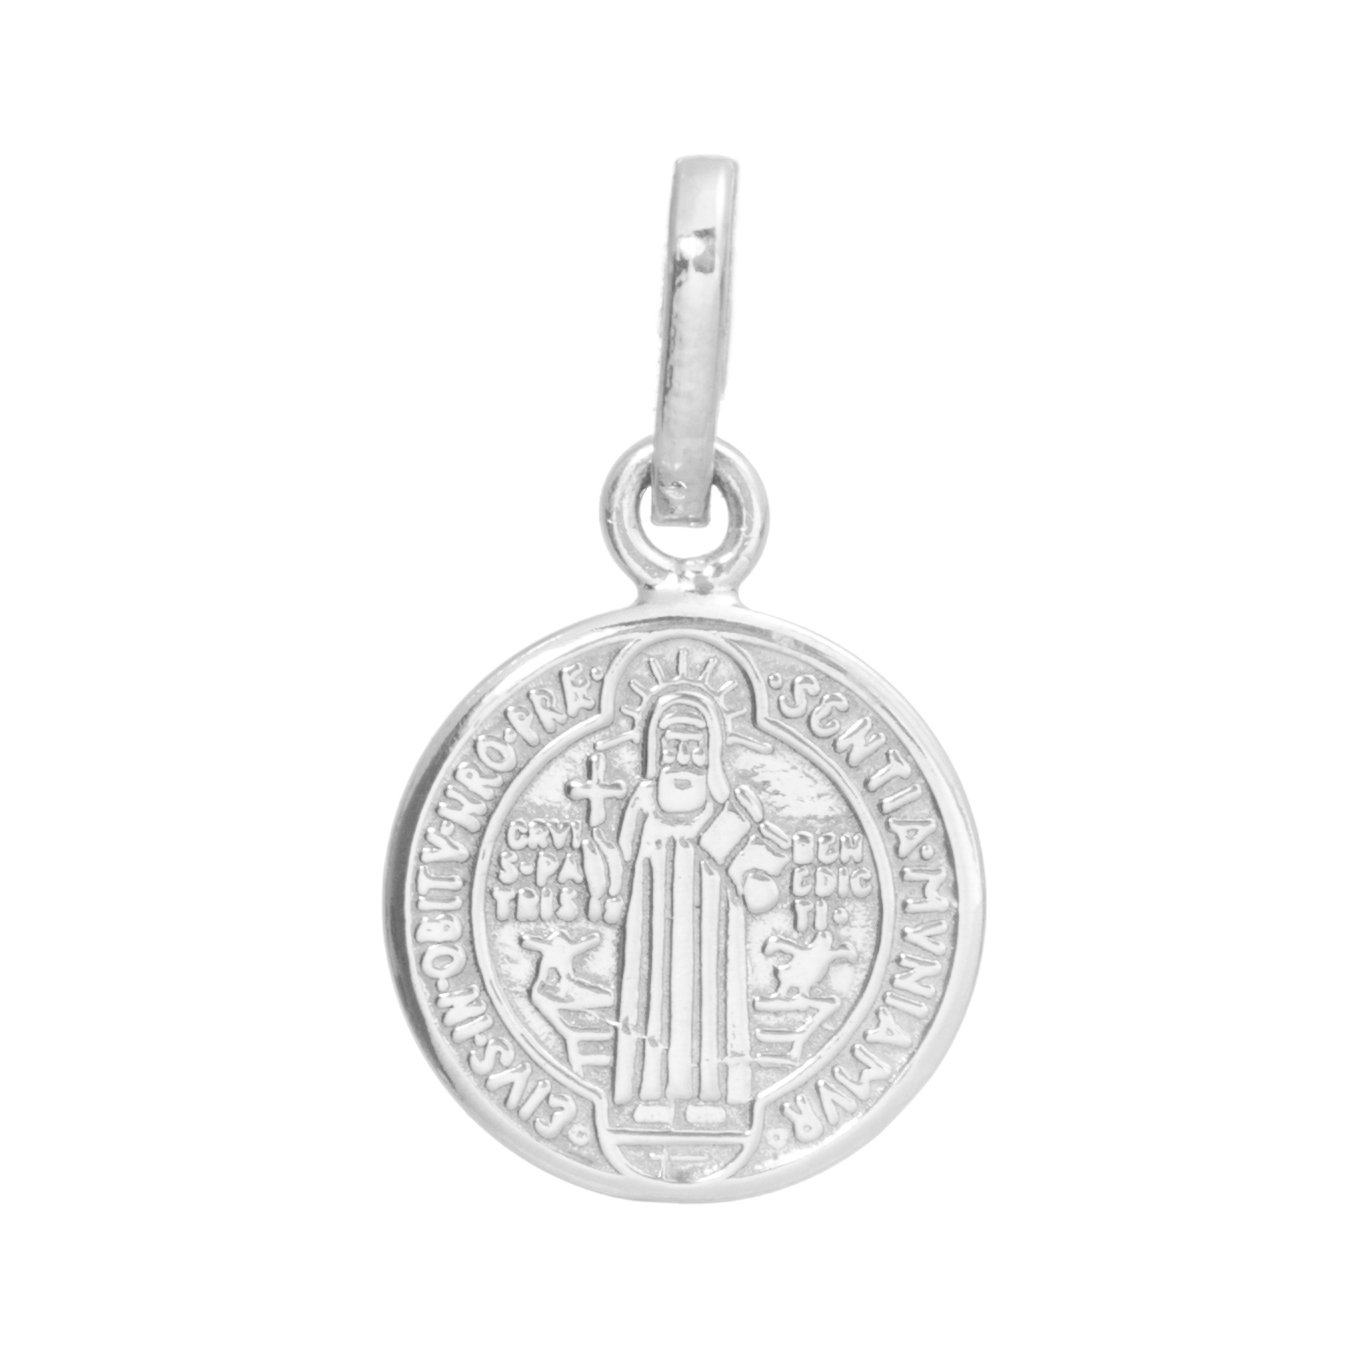 Medalla de plata San Benito mediana